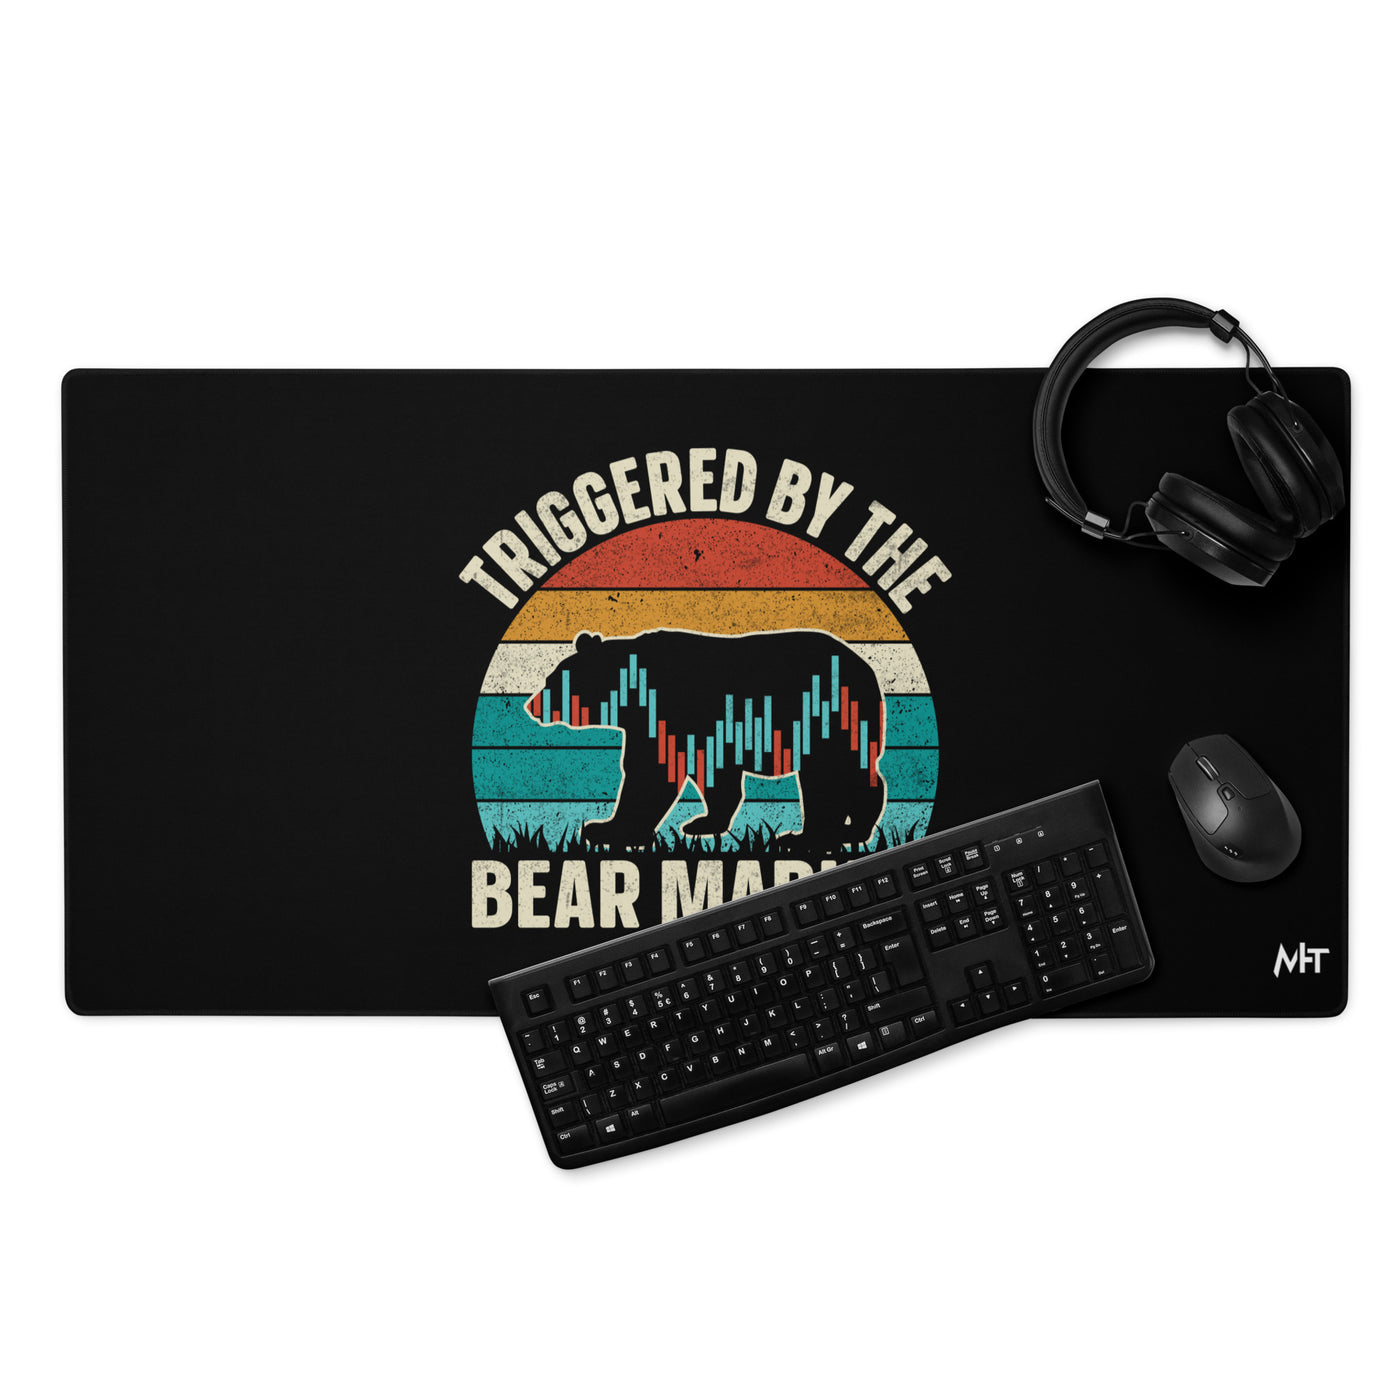 Triggered by the Bear Market - Desk Mat